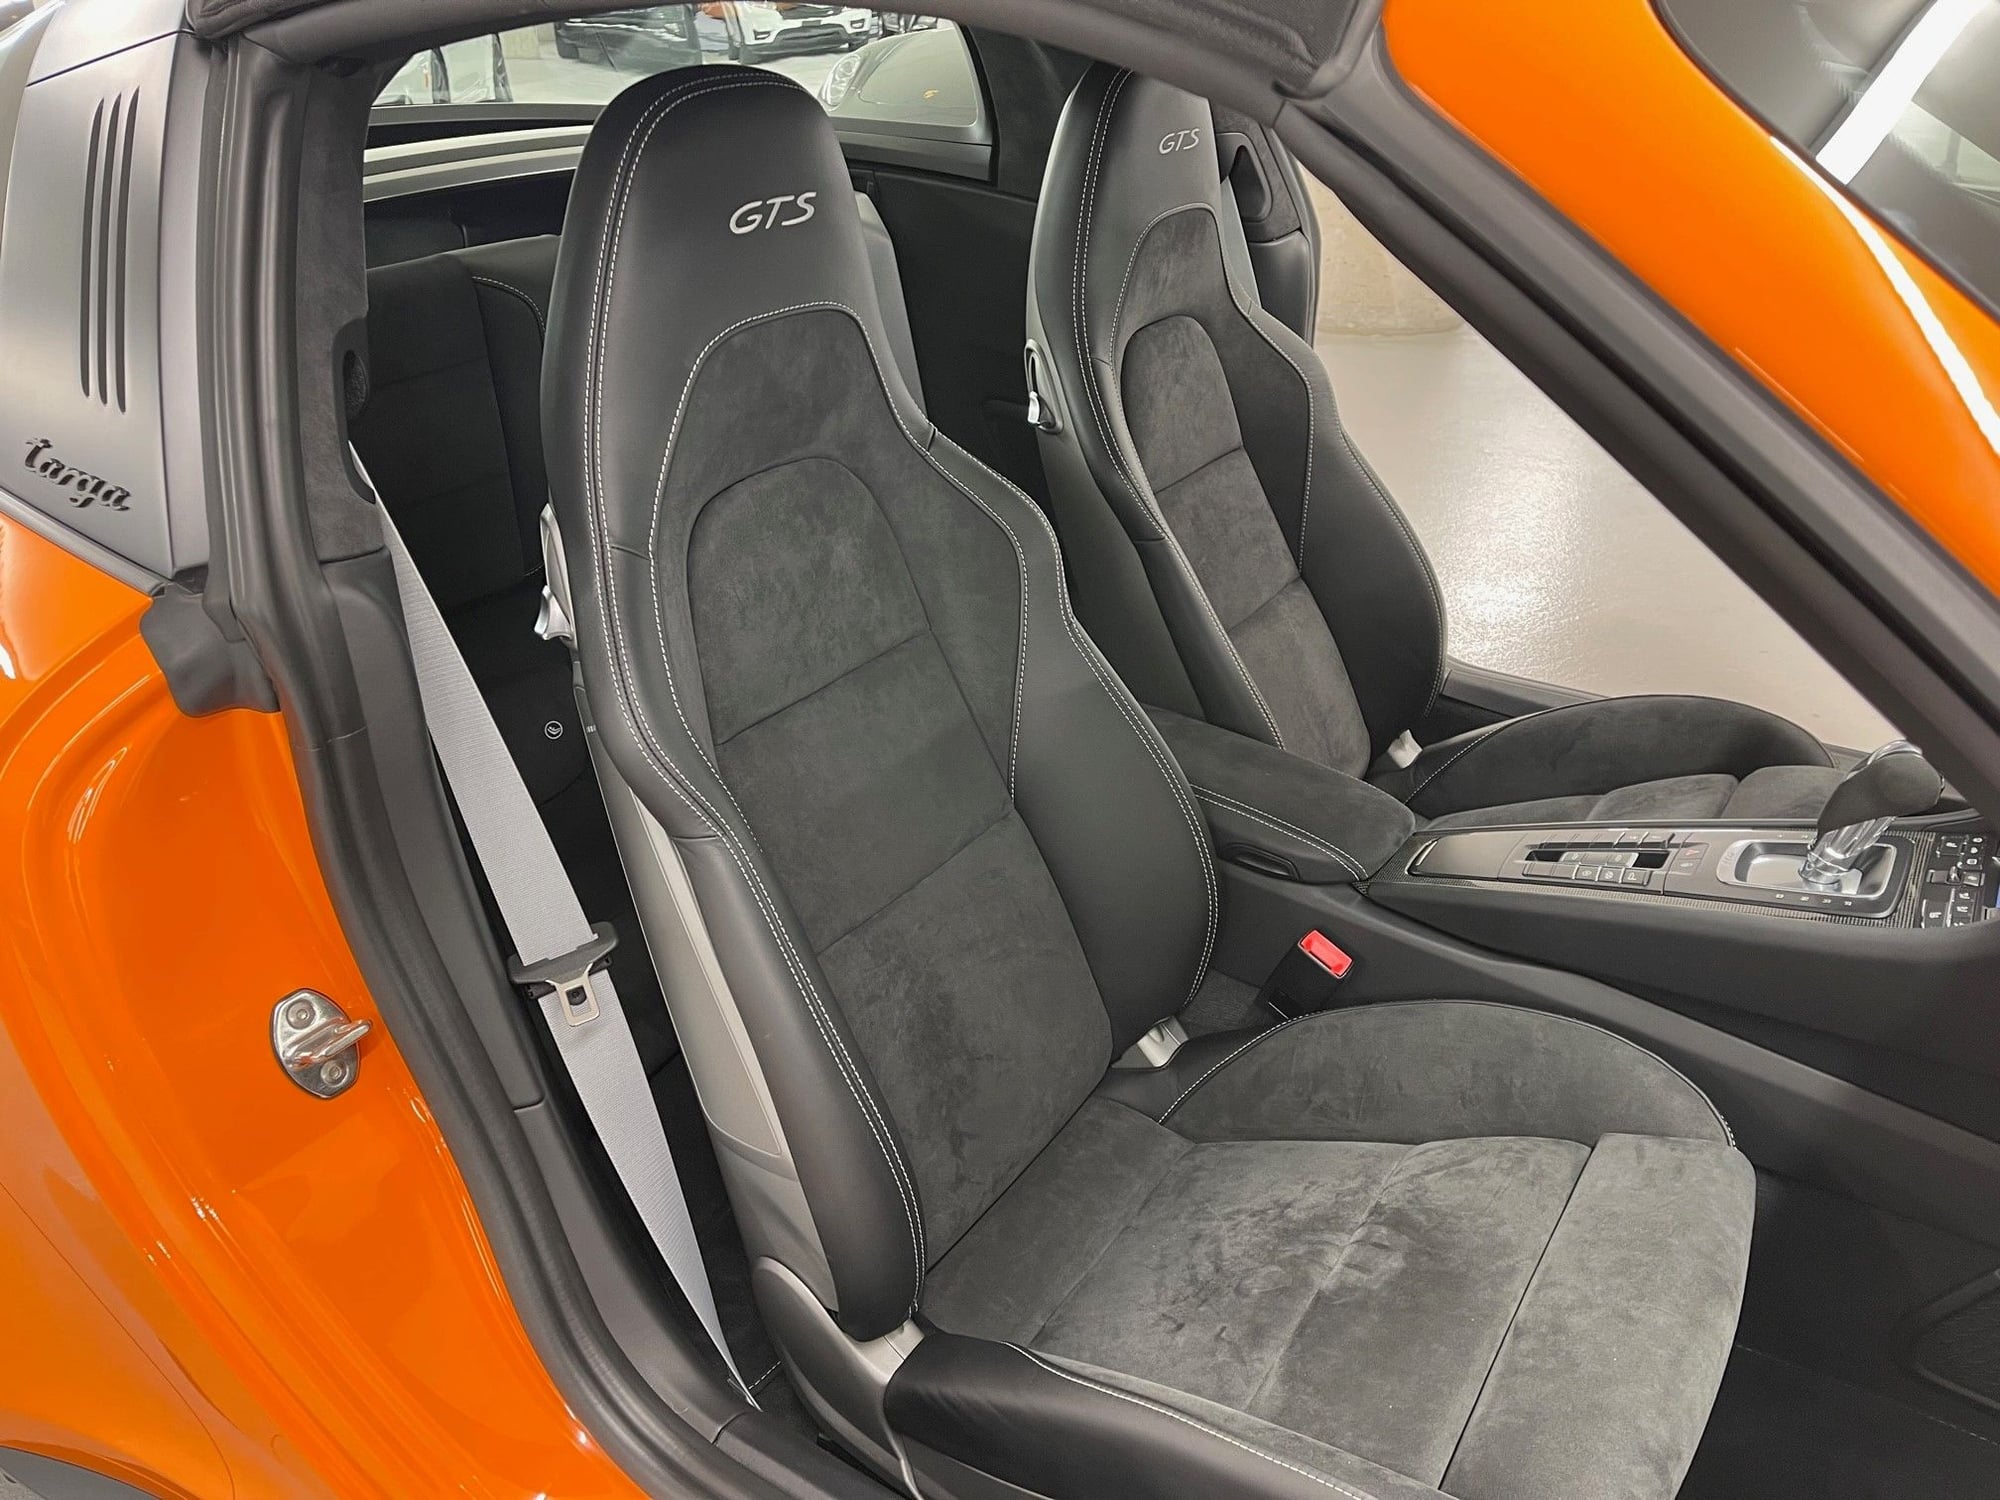 2018 Porsche 911 - 2018 911 Targa 4 GTS CPO PTS Pastel Orange - Used - VIN WP0BB2A98JS134952 - 2,970 Miles - 6 cyl - 4WD - Automatic - Coupe - Orange - Austin, TX 78759, United States